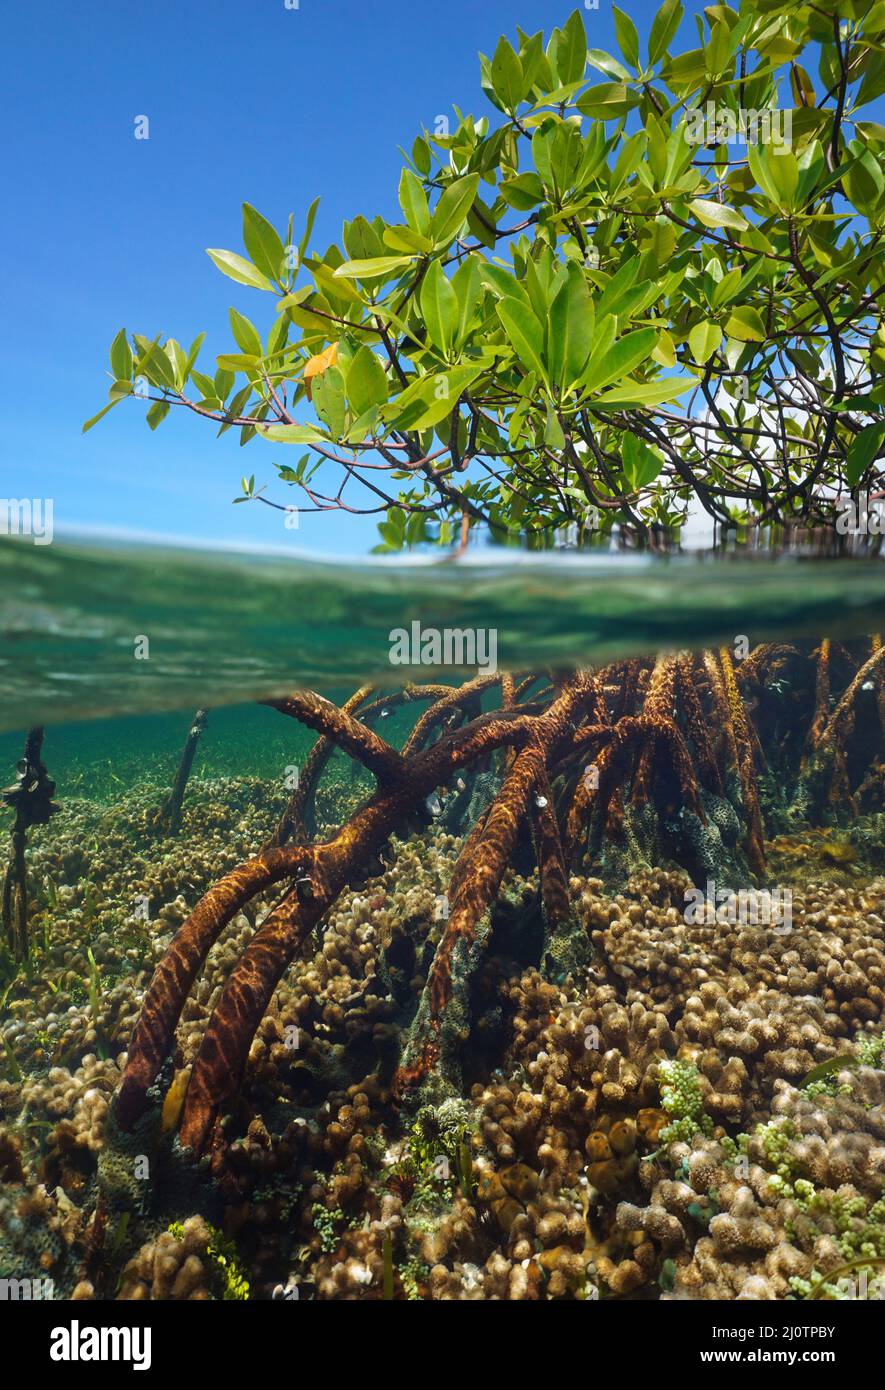 Albero di mangrovie nel mare, fogliame e radici vista su e sotto superficie d'acqua nei Caraibi ( mangrovie rosse Rhizophora mangle ) Foto Stock